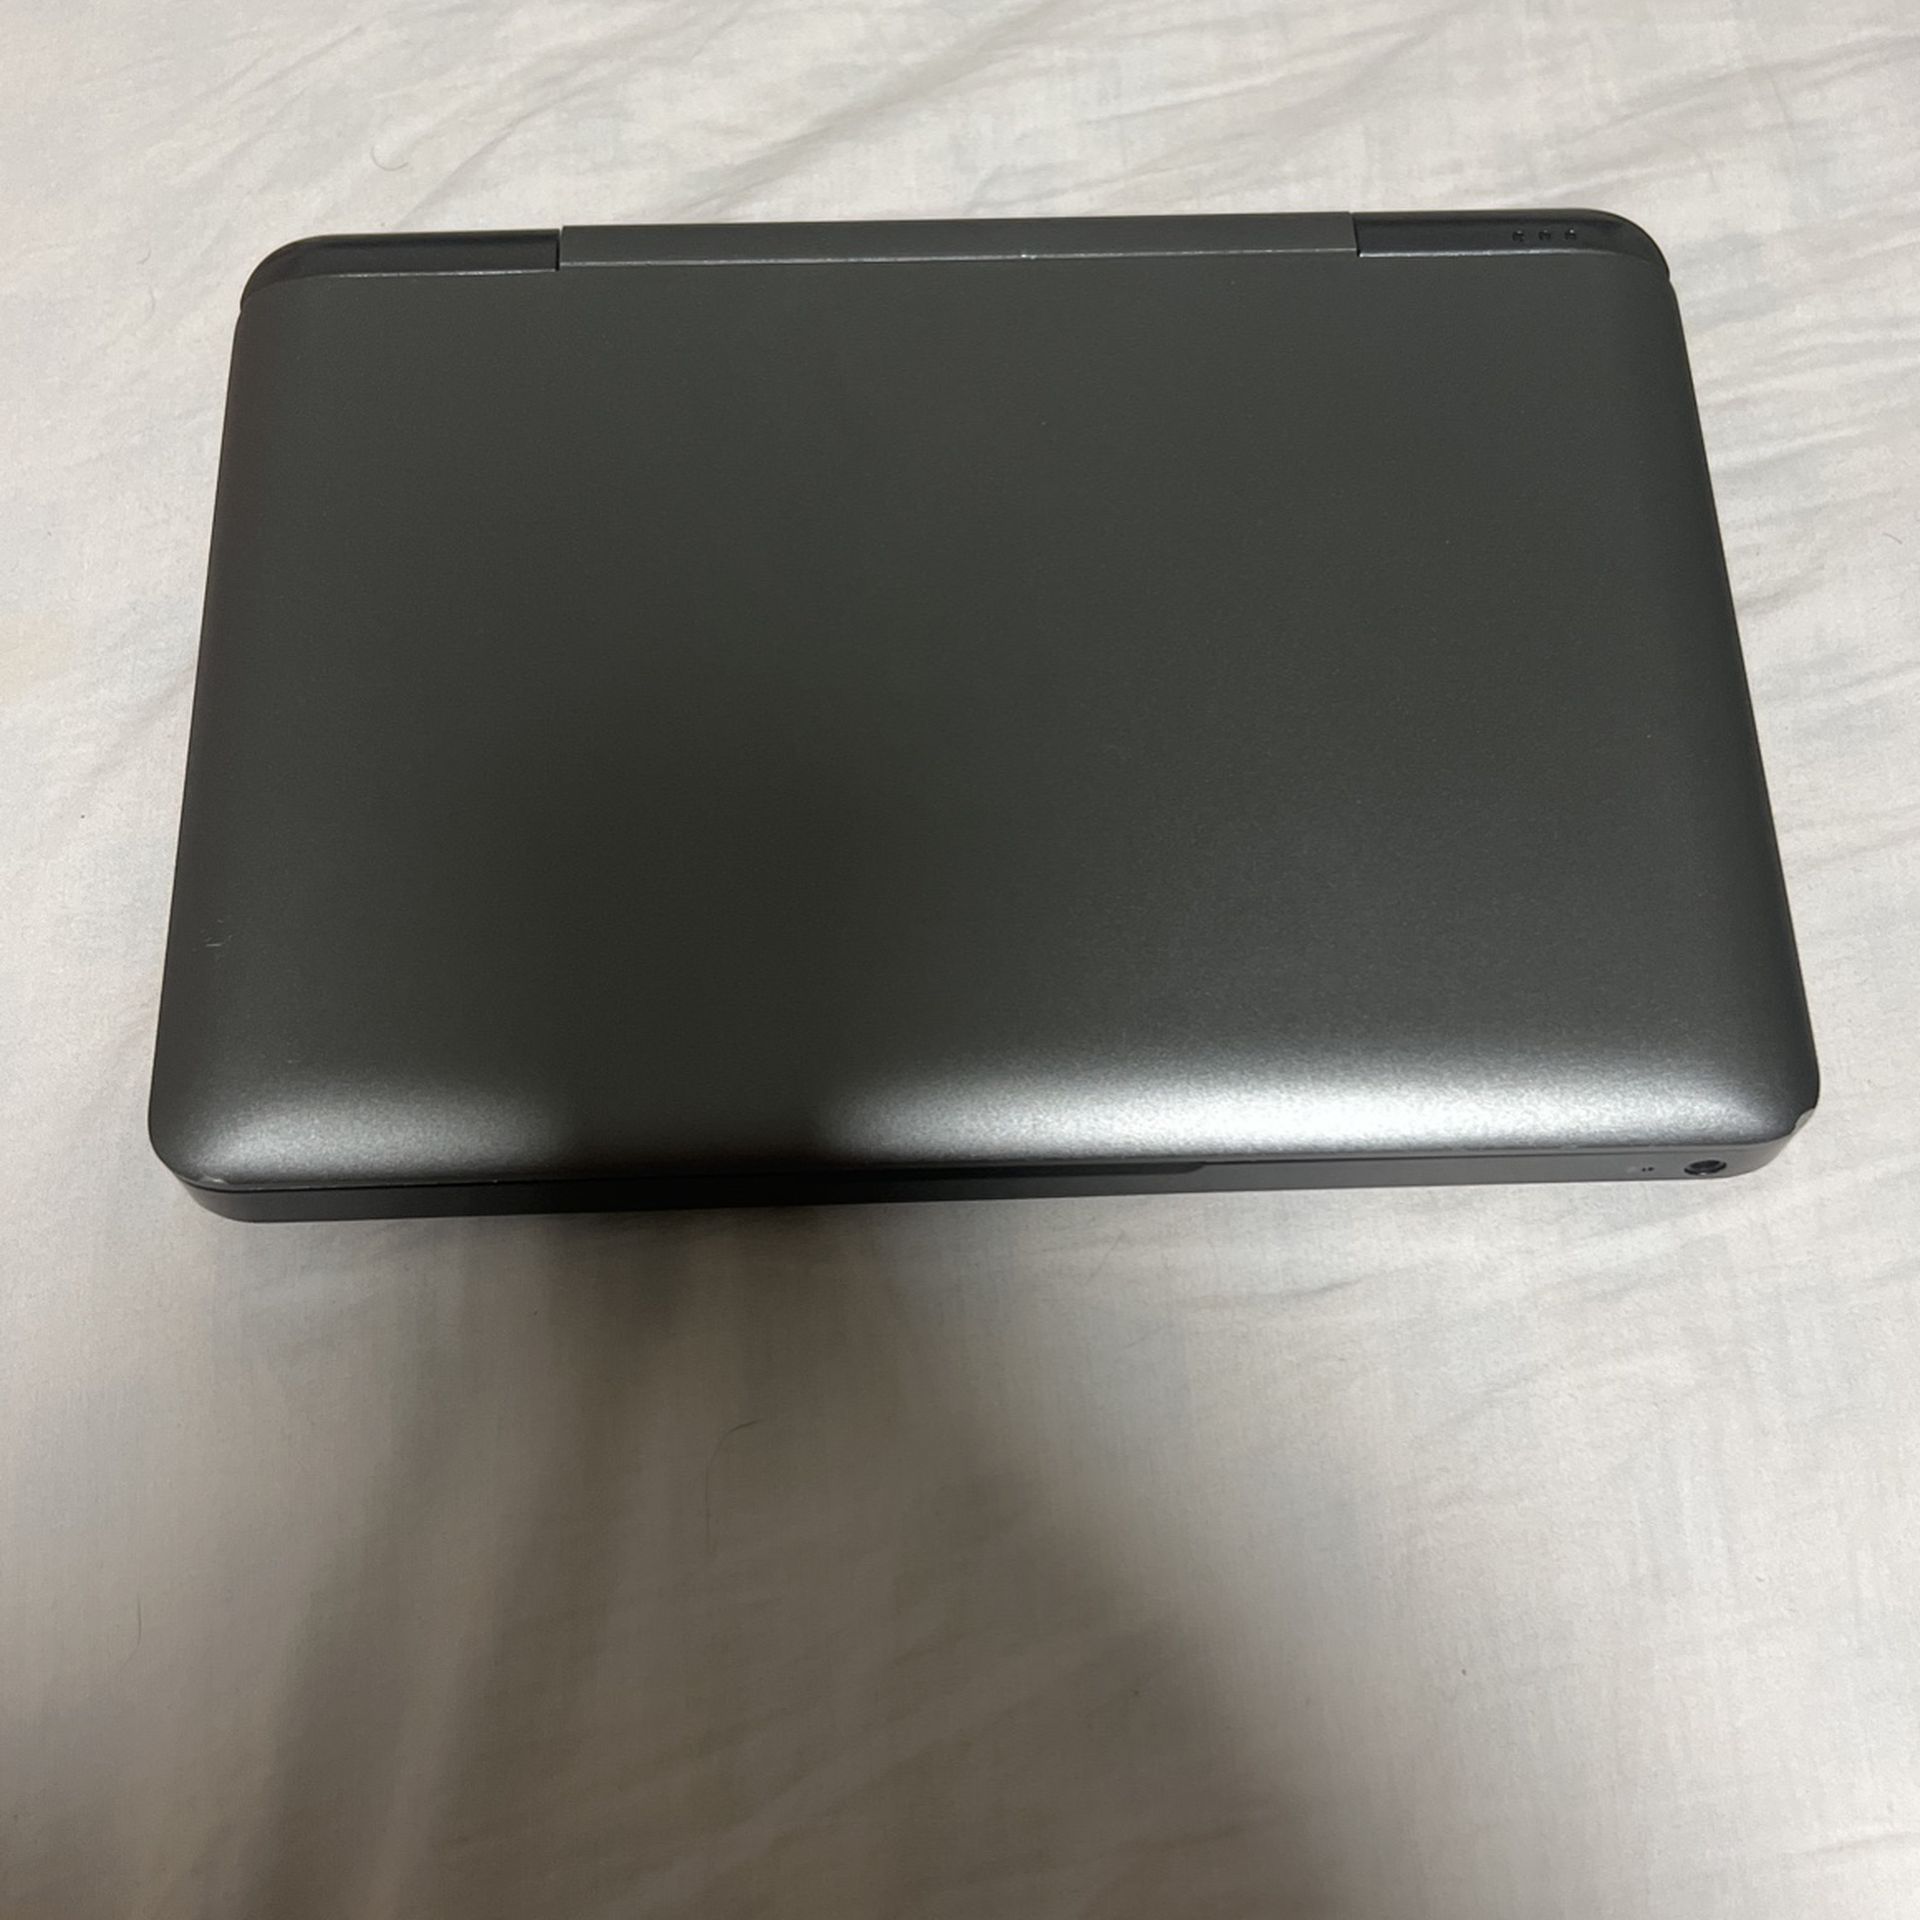 GPD WIN MAX 2020 Mini Gaming Laptop